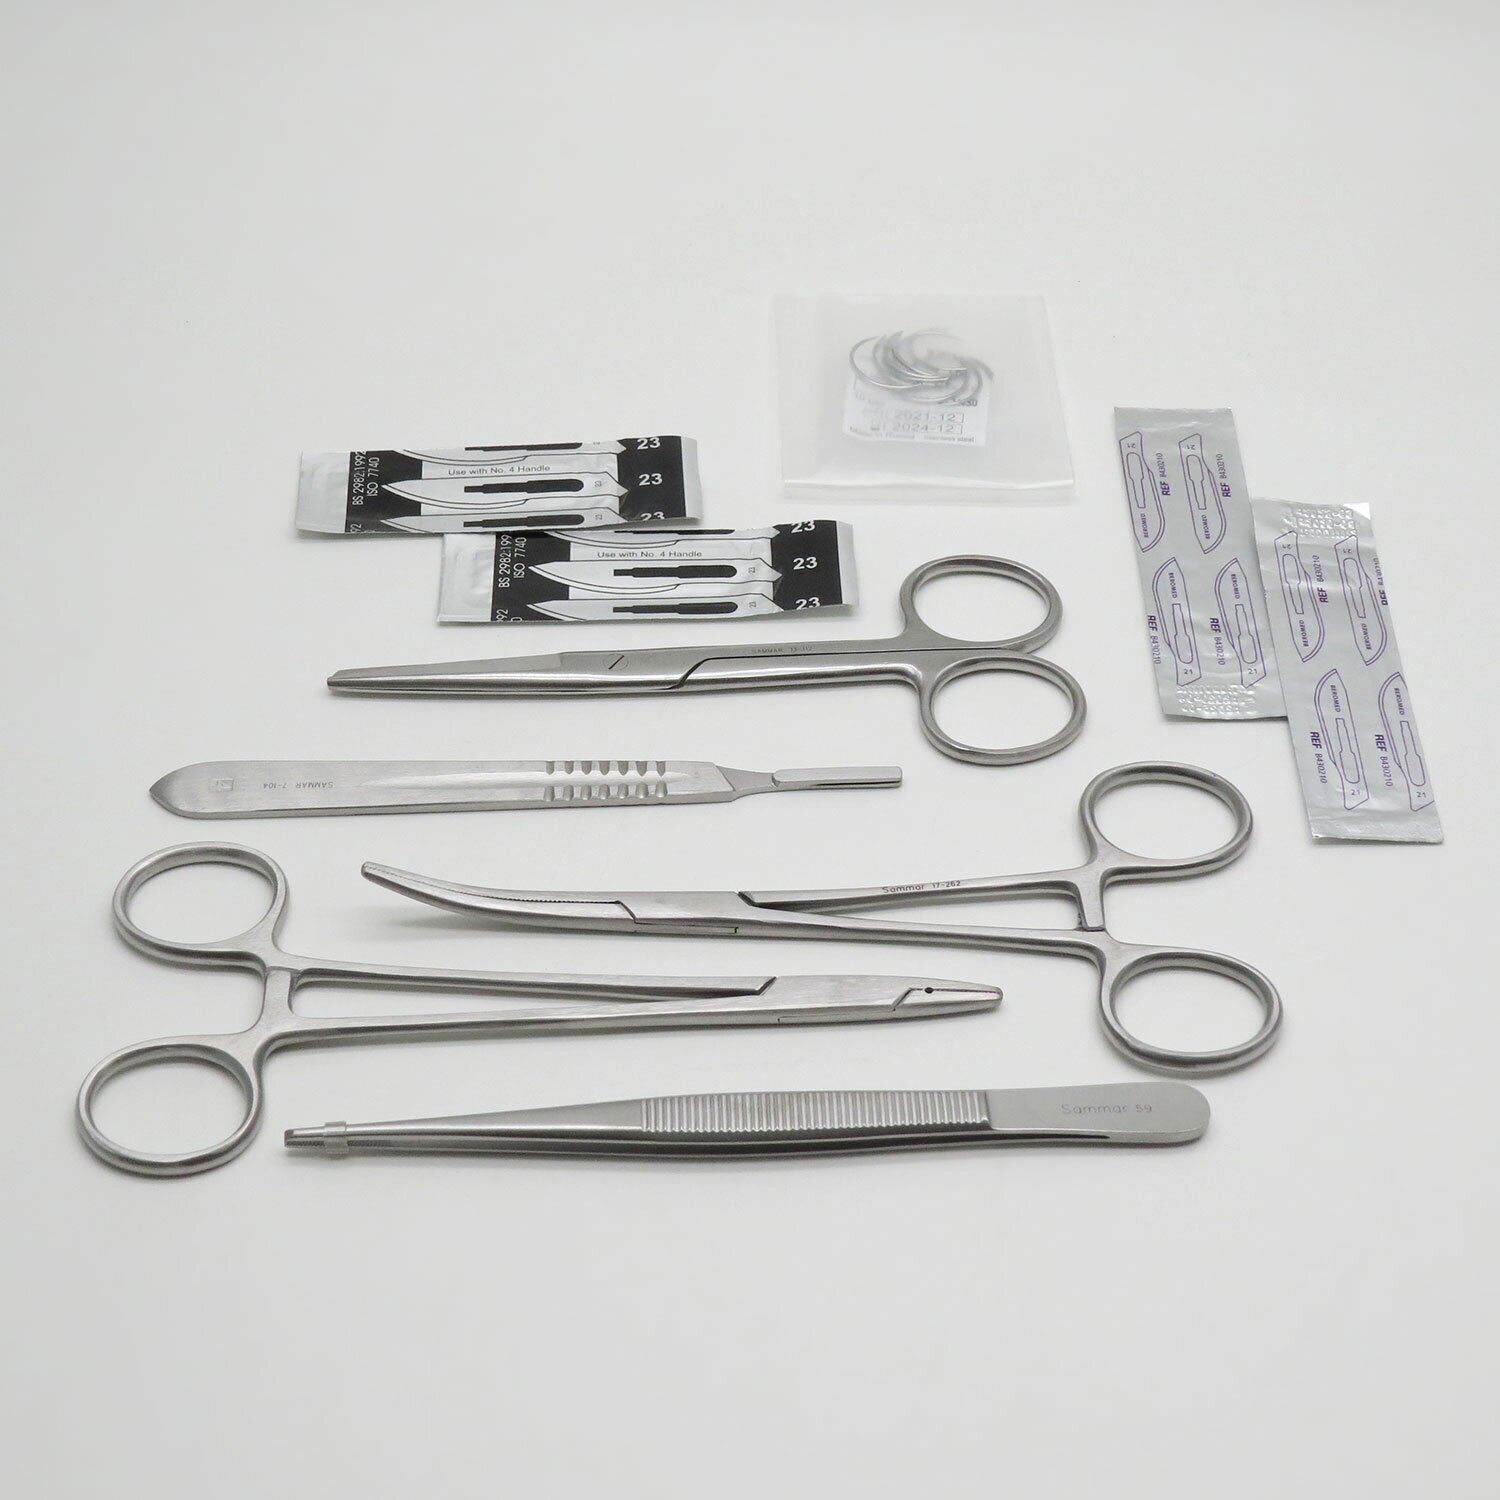 Набор хирургических инструментов в футляре для студента-медика